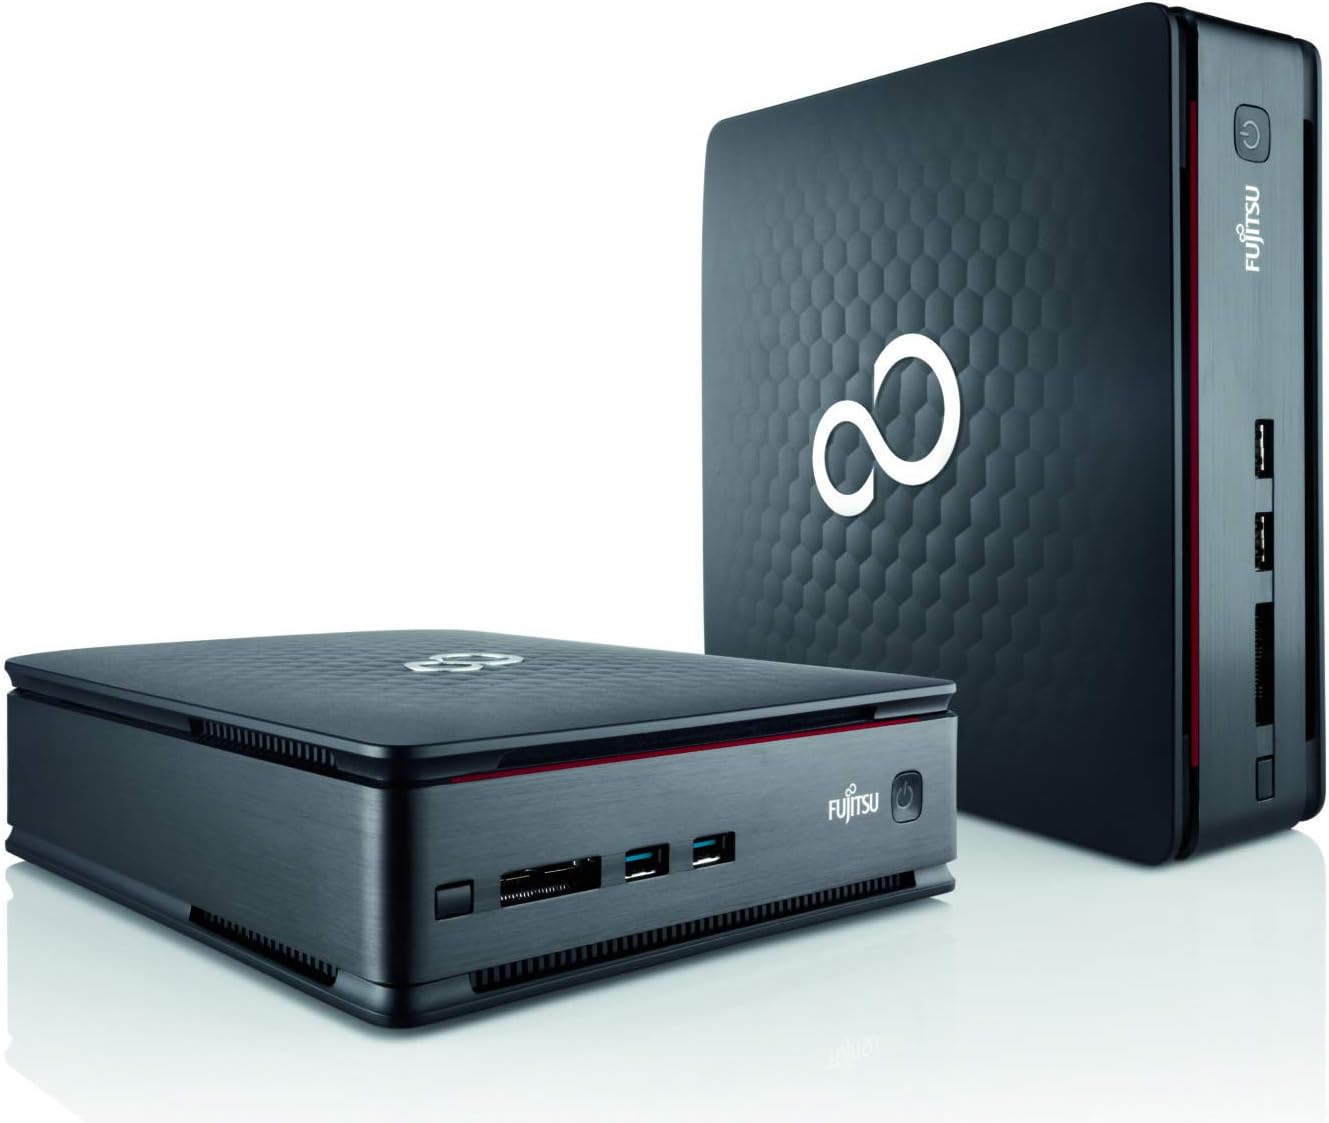 Fujitsu Esprimo Q920 0-Watt Intel Core i5 240GB SSD review